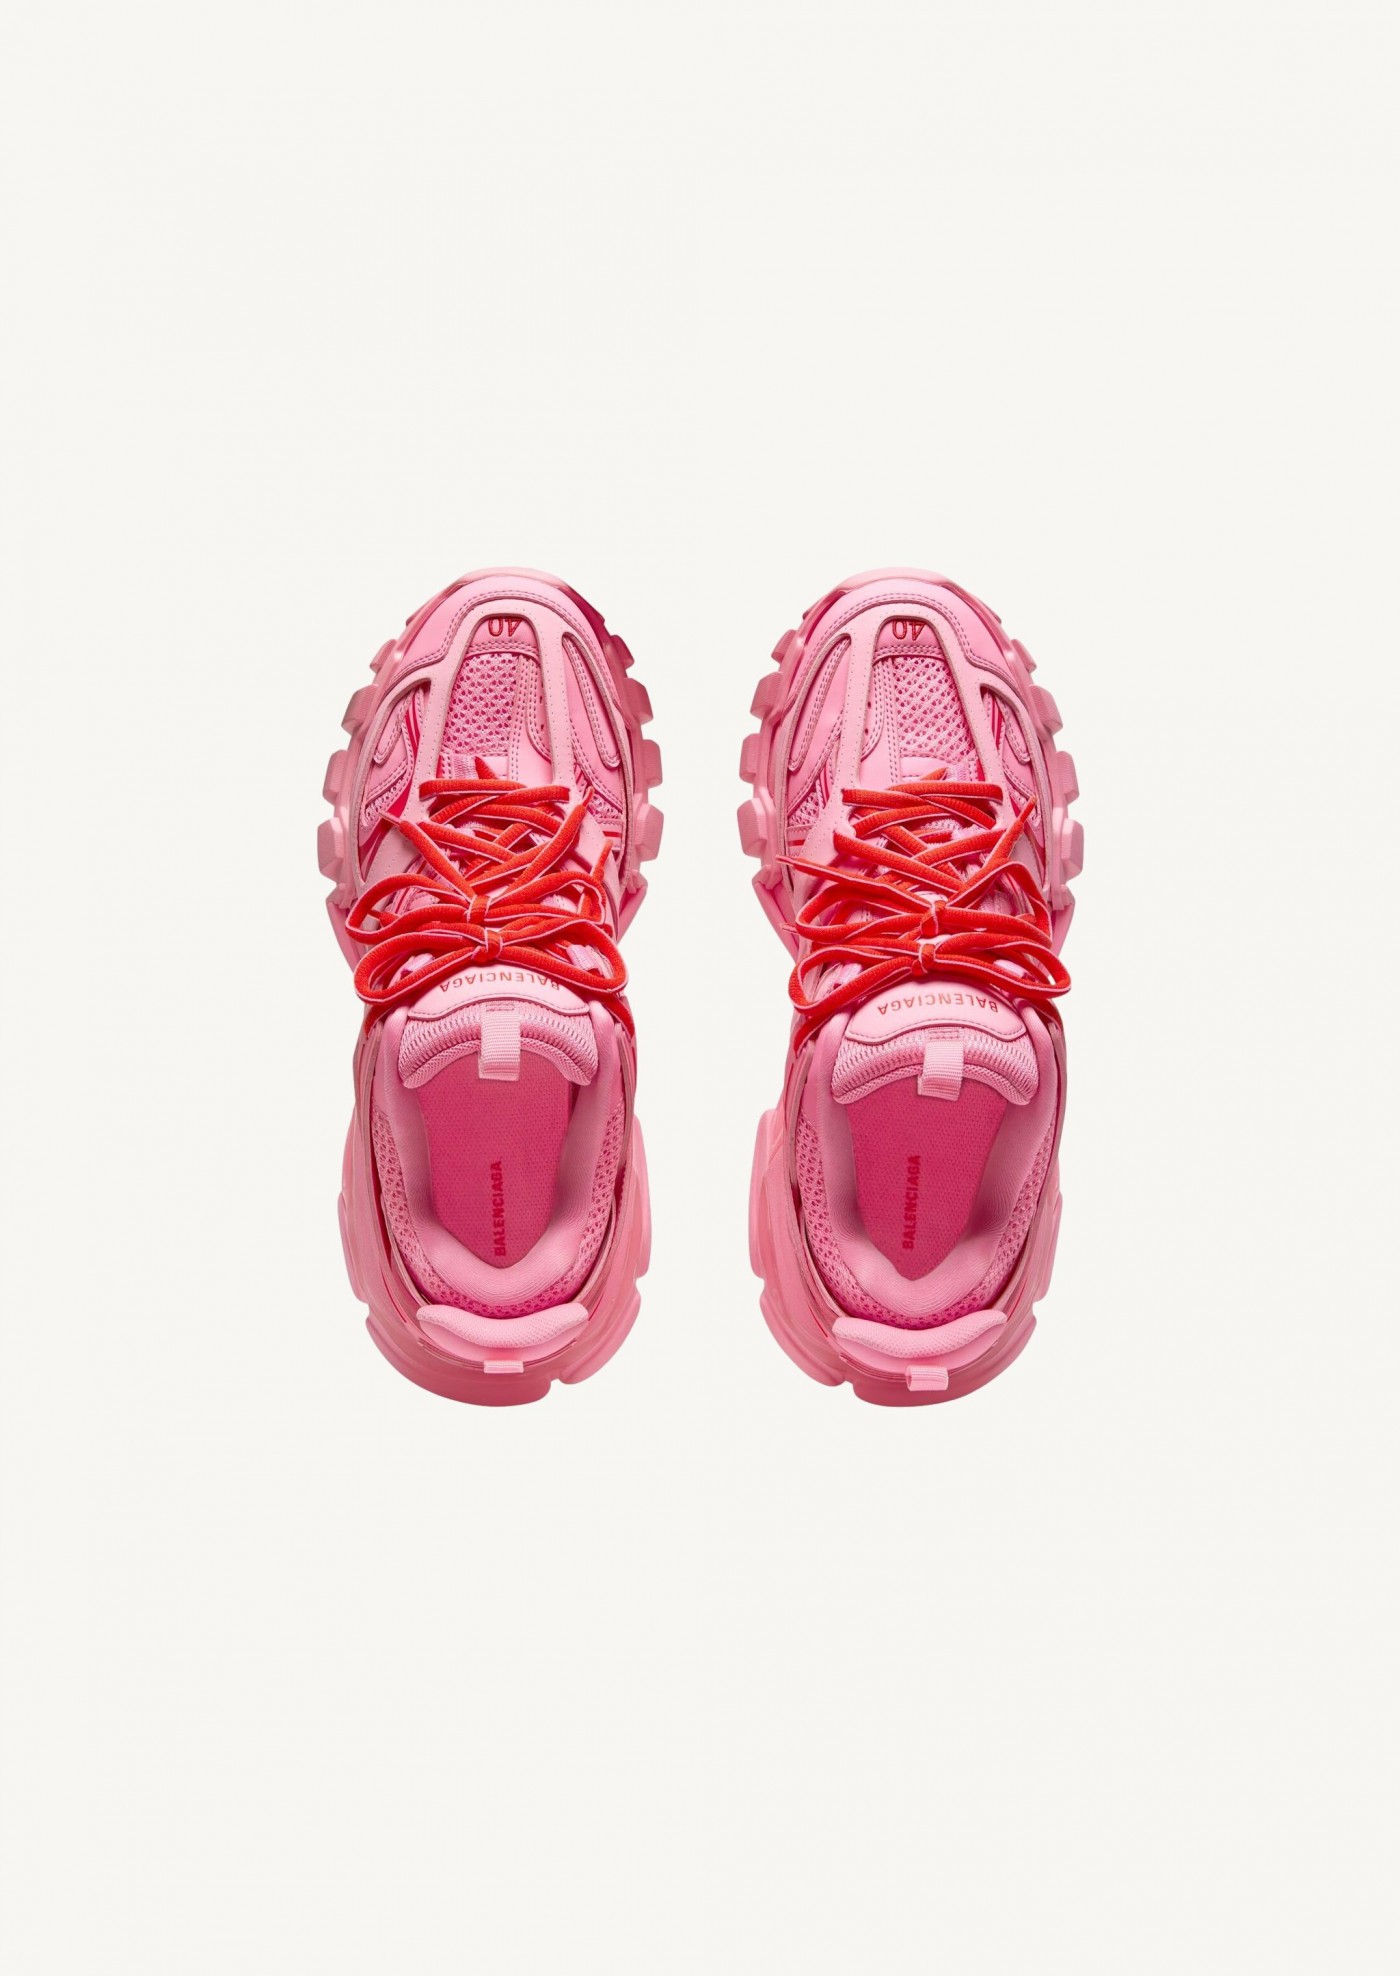 Sneaker track pour femme en rose fluo